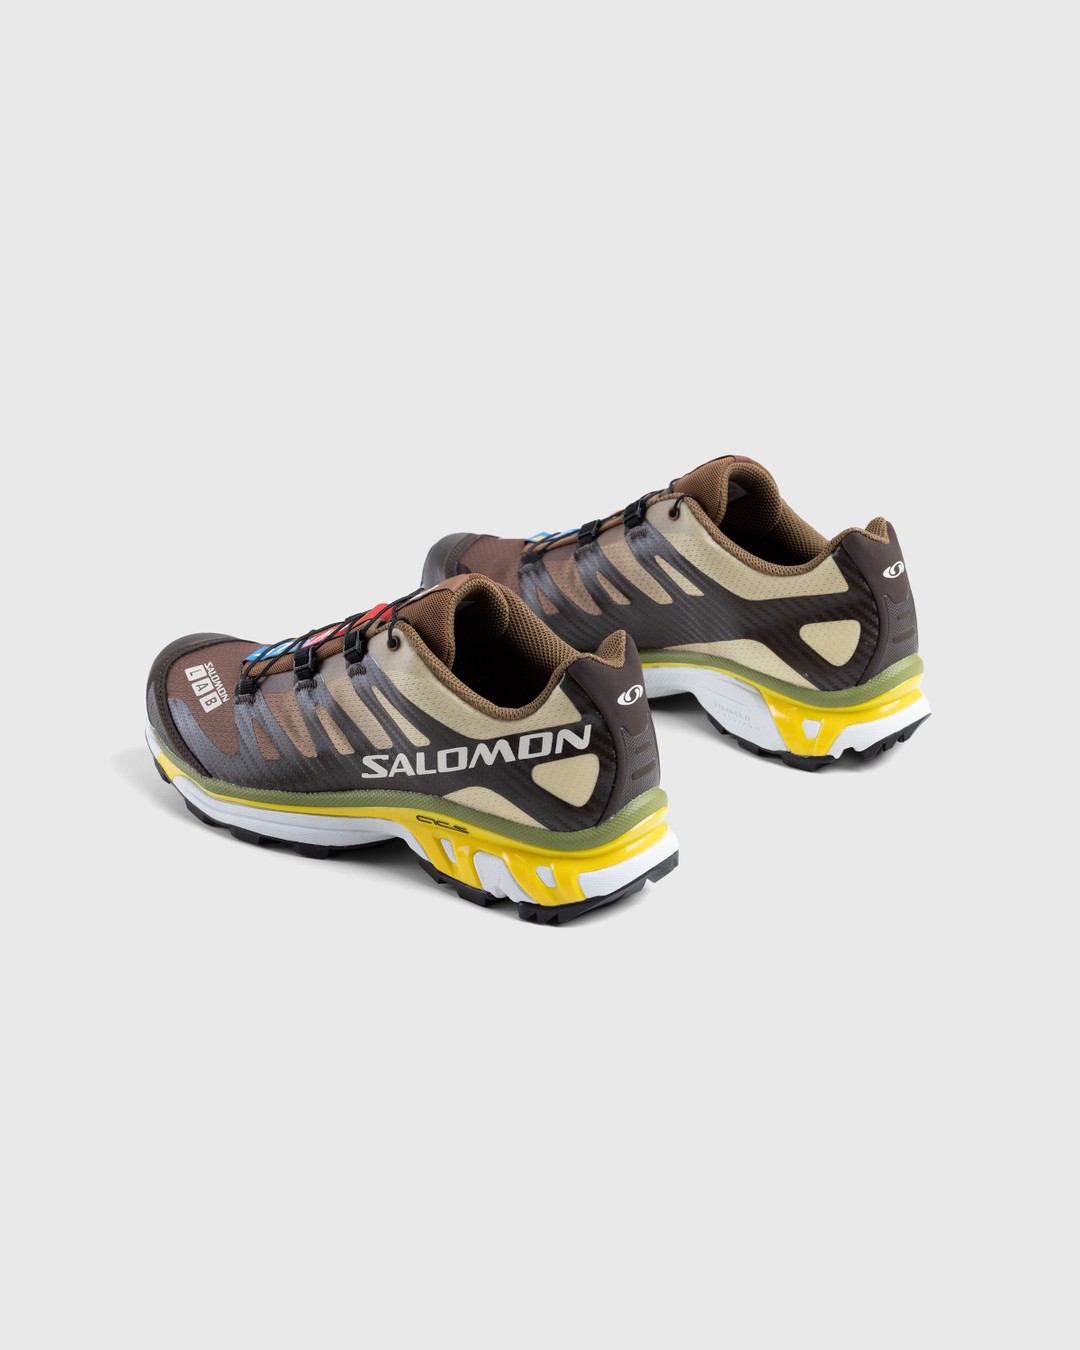 Salomon – XT-4 Delicioso/Toffee/Empire Yellow - Sneakers - Brown - Image 4